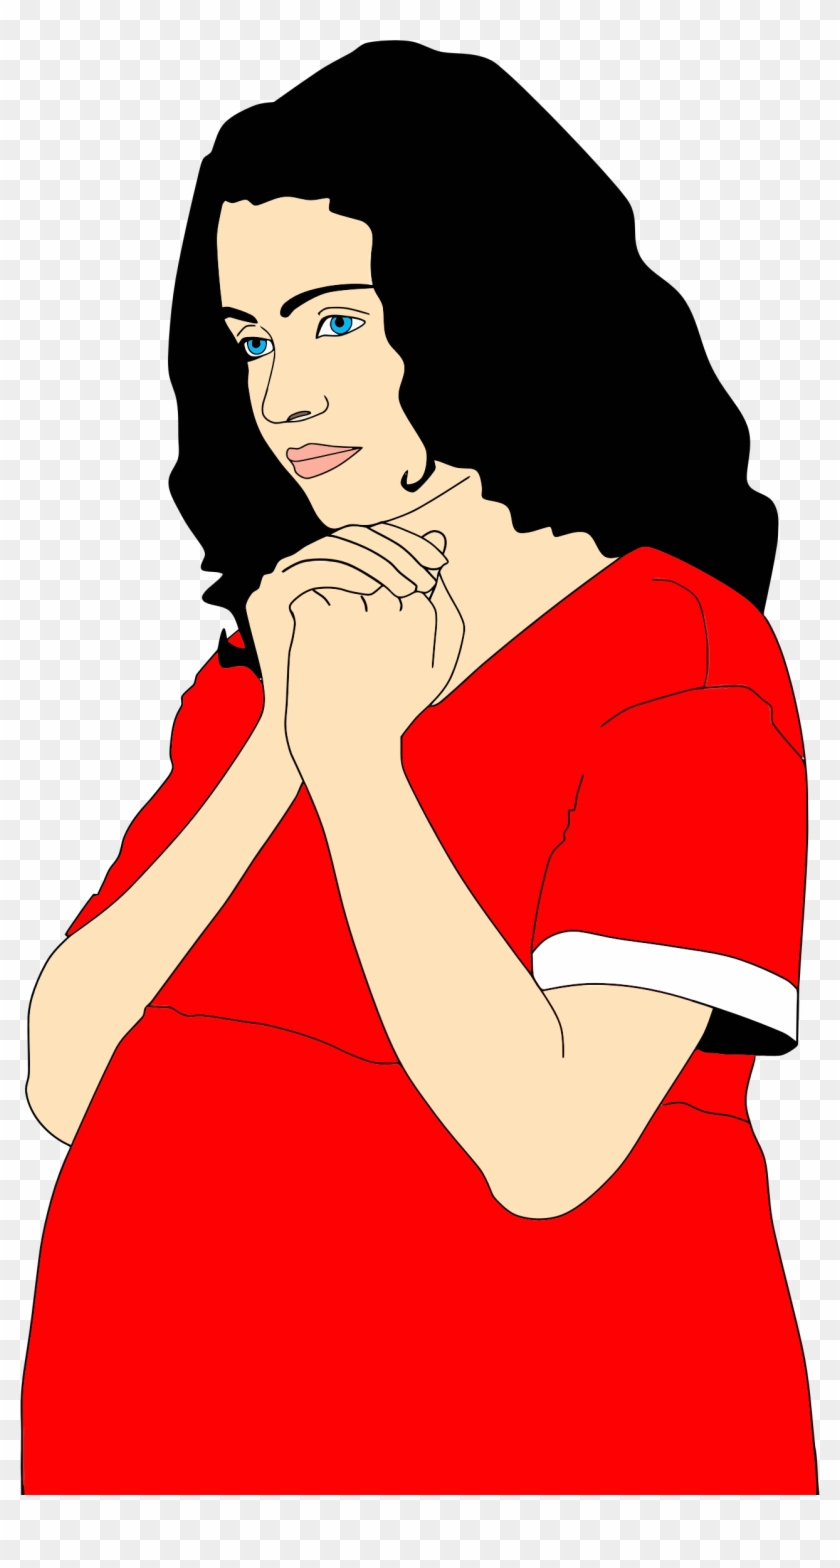 Pregnancy Woman Silhouette Clip Art - Pregnancy Woman Silhouette Clip Art #493047